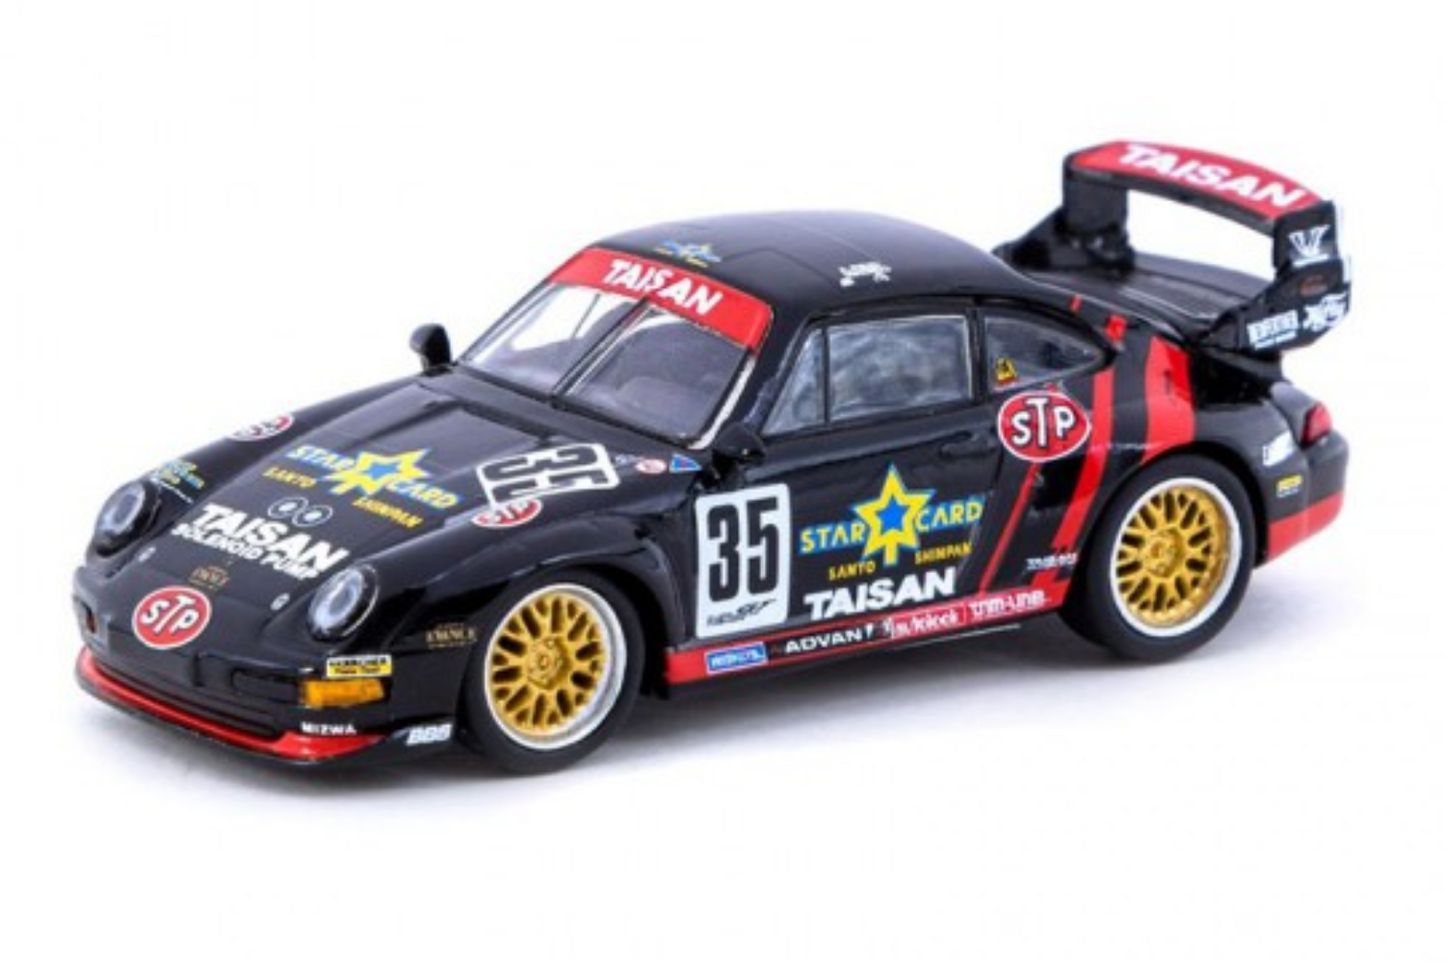 [Tarmac Works] Porsche 911 (993) GT2 JGTC Taisan StarCard #35